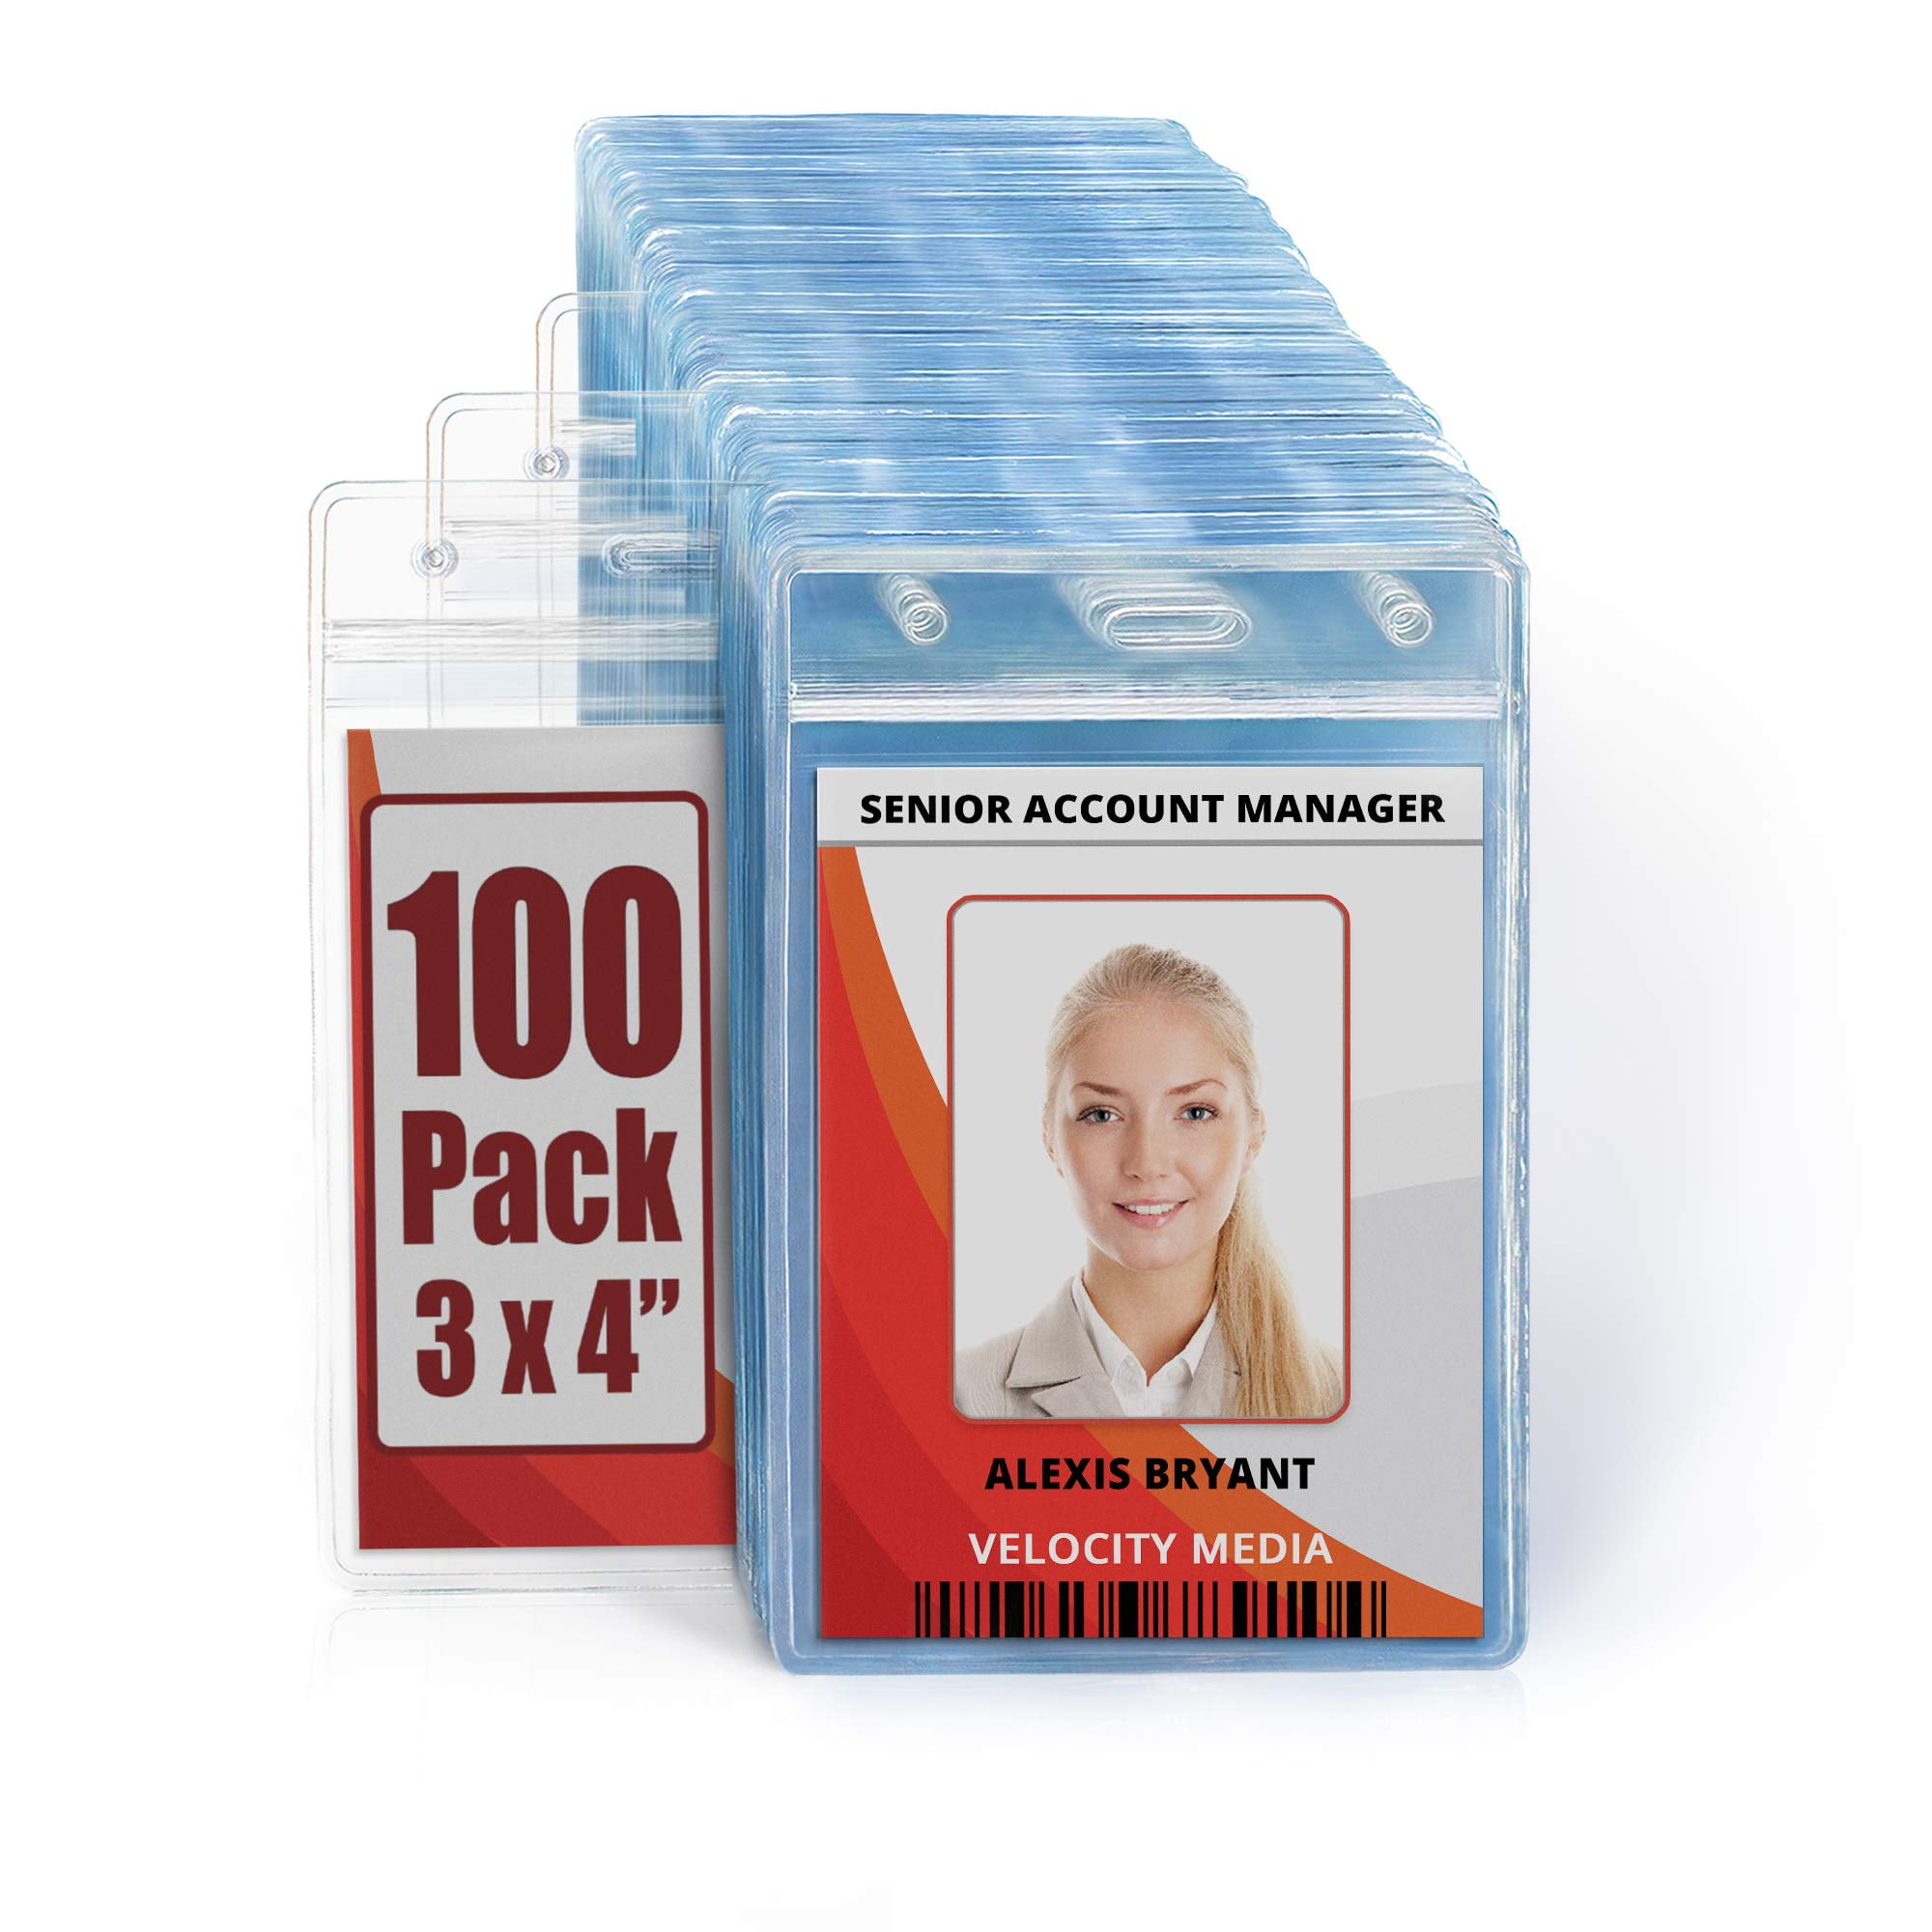 Mifflin 4 x 3 Clear Vertical ID Badge Holders, 100 Pack